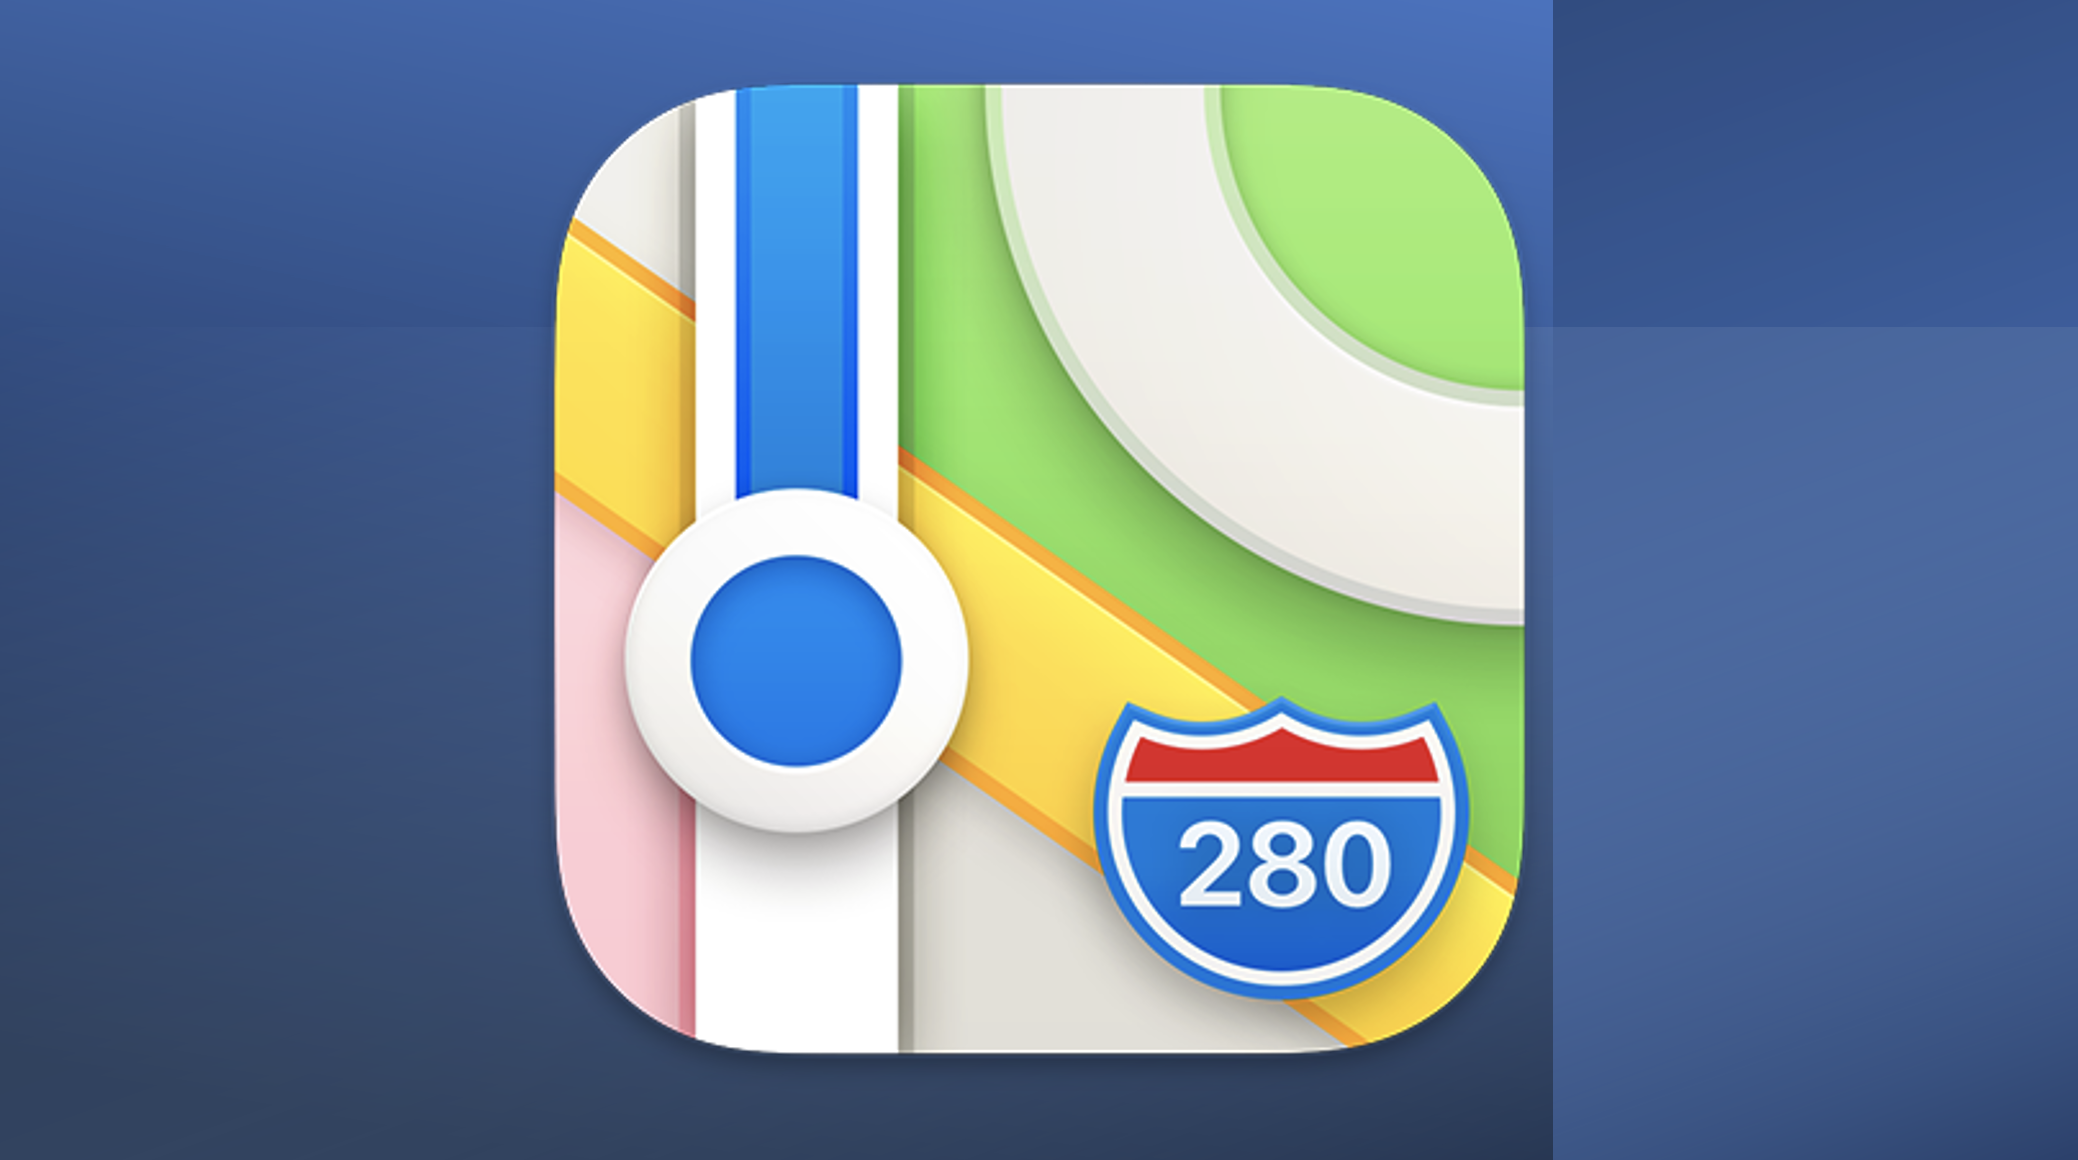 iphone maps icon